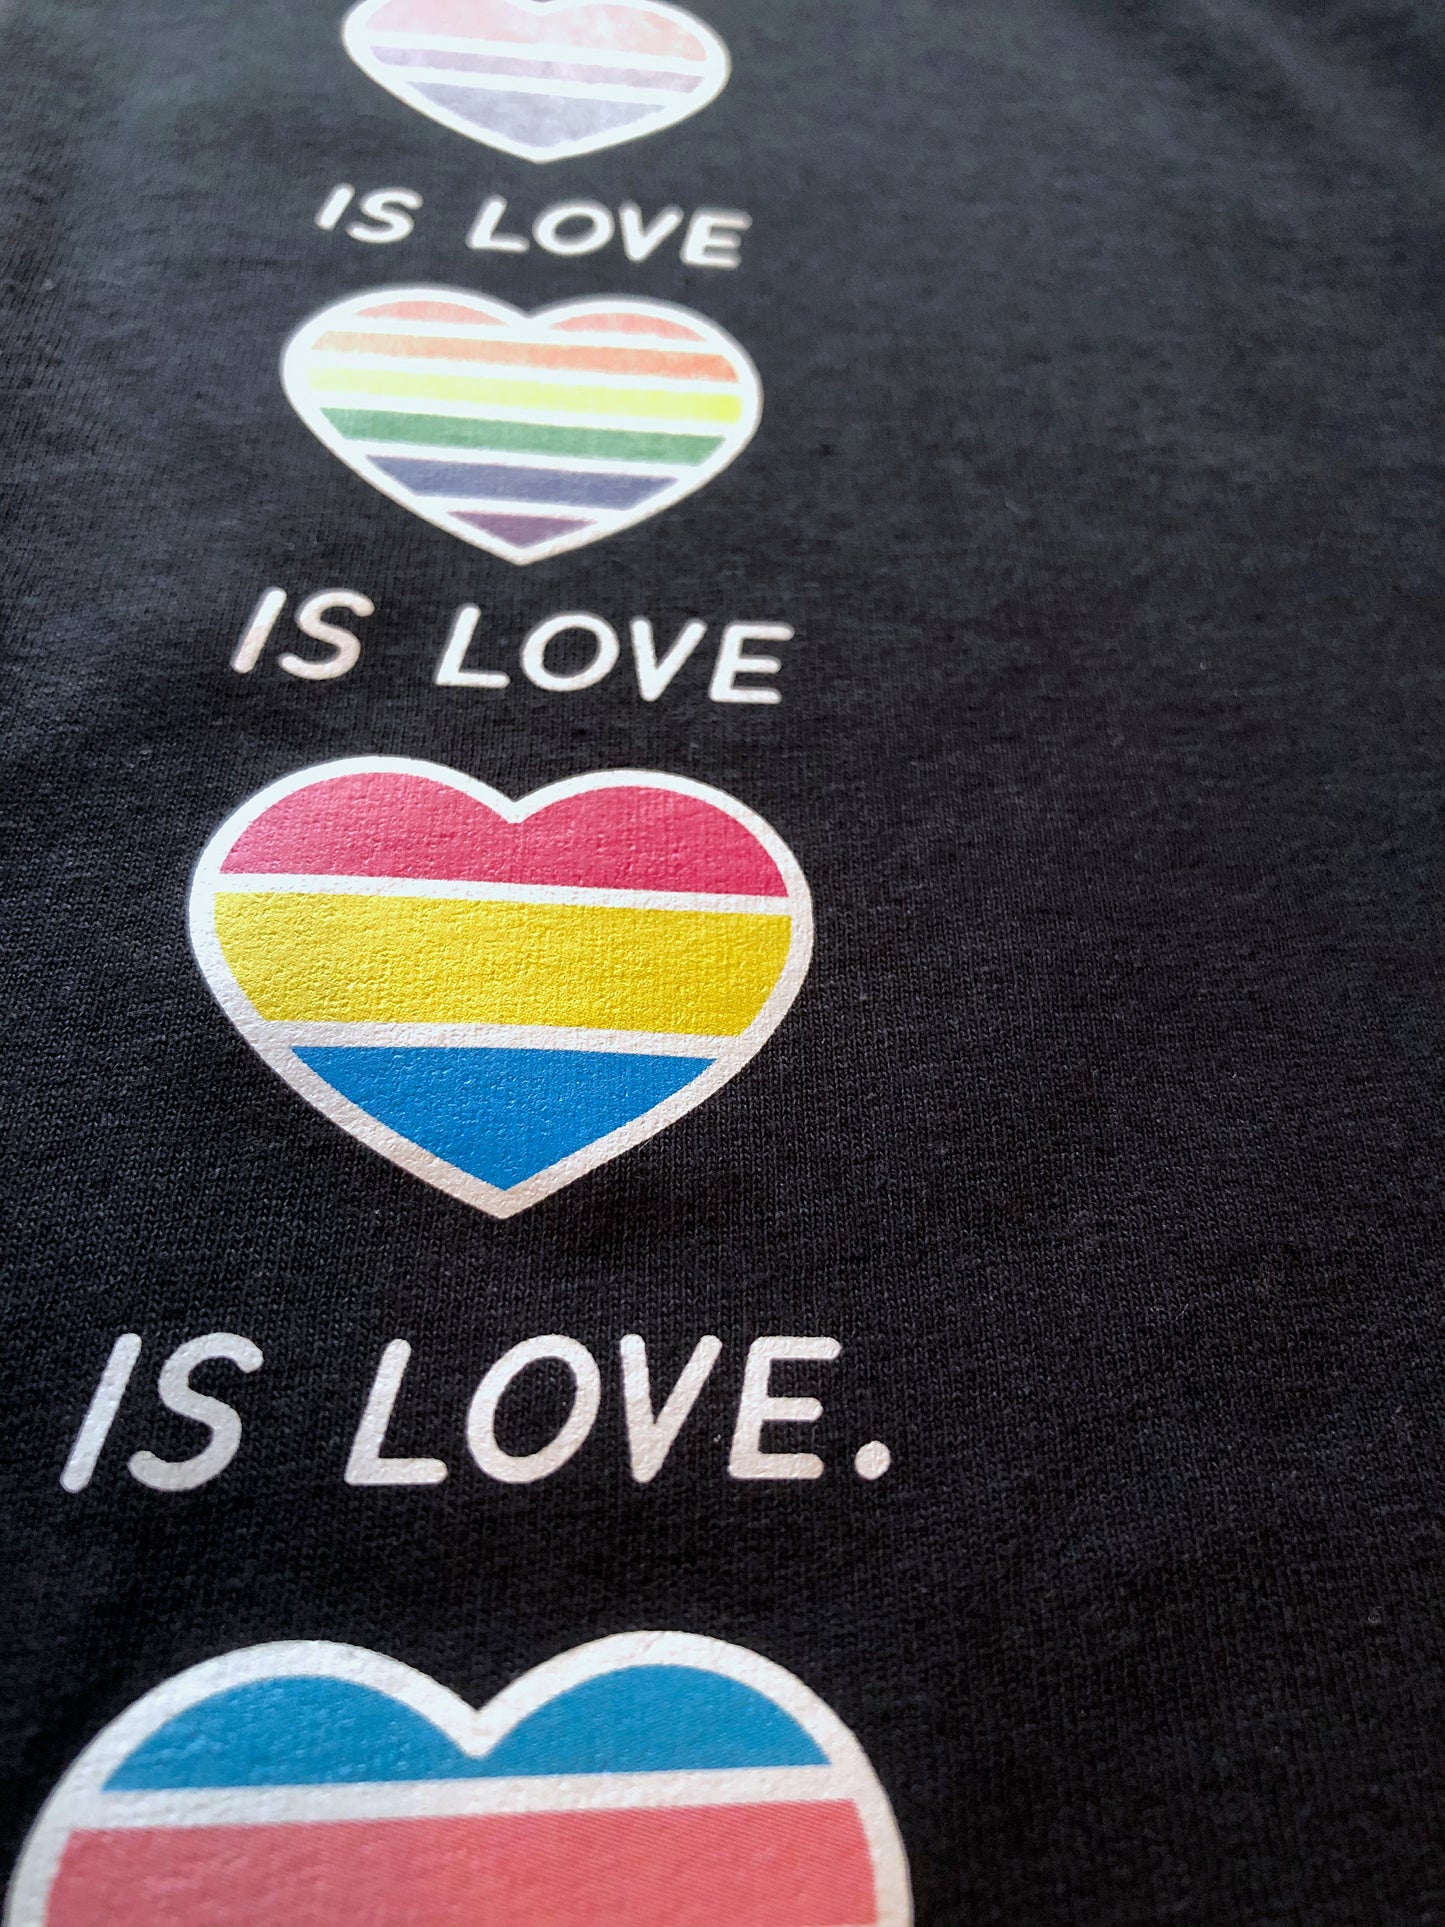 Pride Hearts Rainbow T-Shirt, Love Is Love Is Love Tee Shirt, Gay Pride Heart Gift Idea, LGBTQ+ Heart-shaped Flags Top